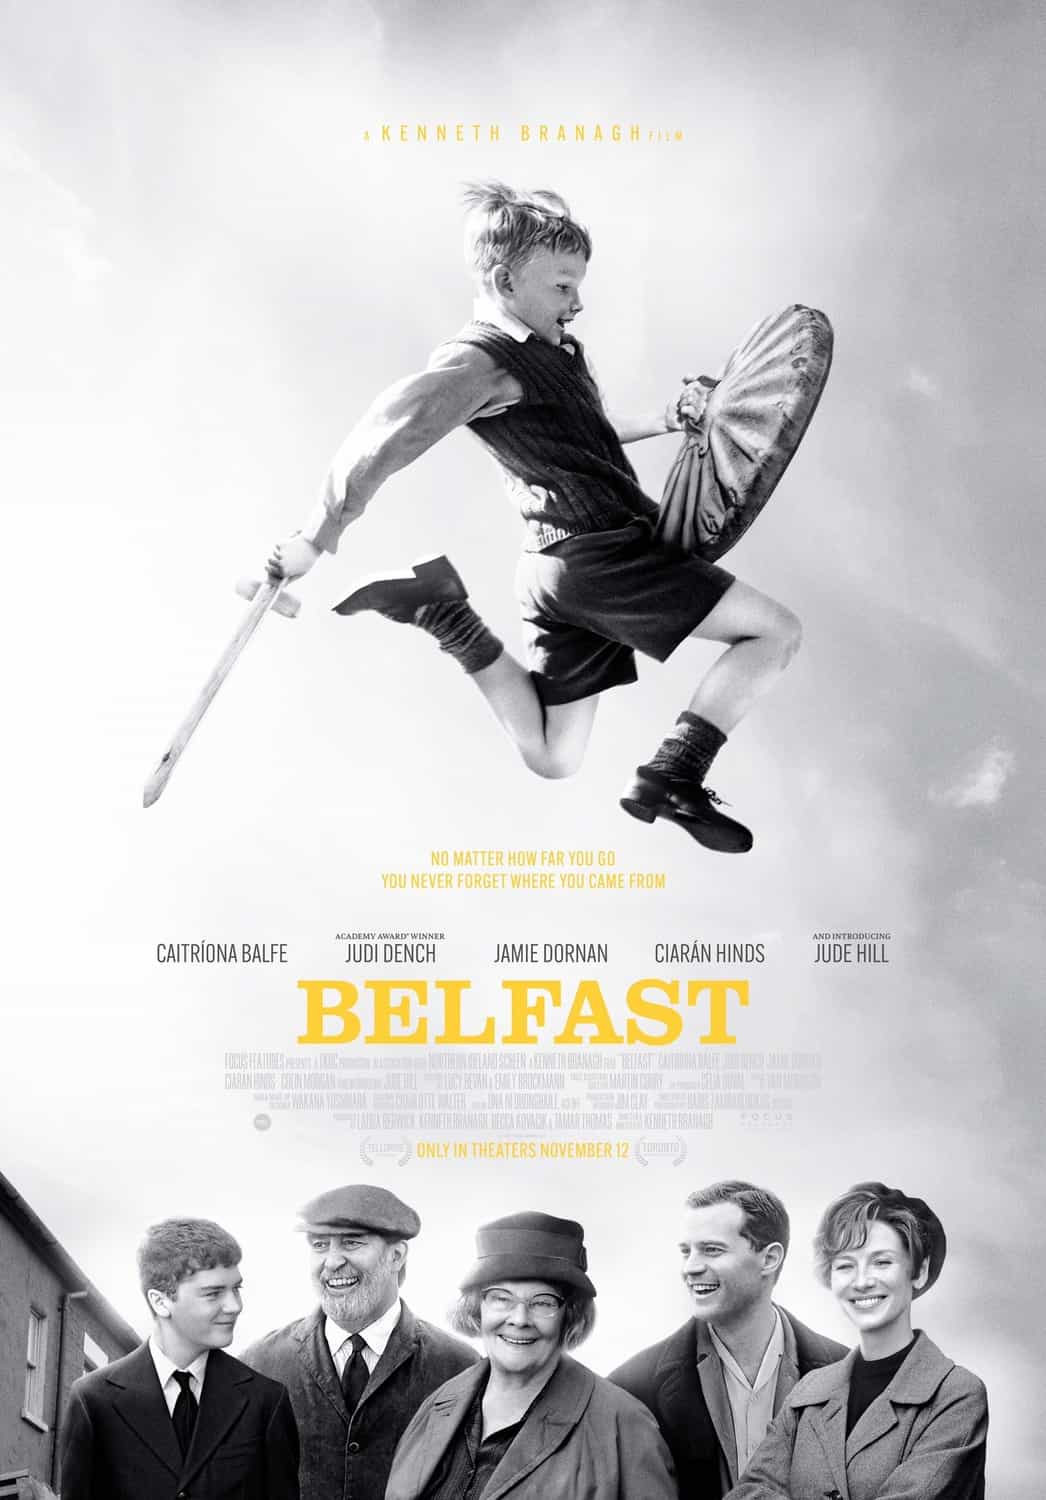 UK new movie preview 21st January 2022 - Belfast, Nightmare Alley and A Journal For Jordan - #belfast #nightmarealley #ajournalforjordan